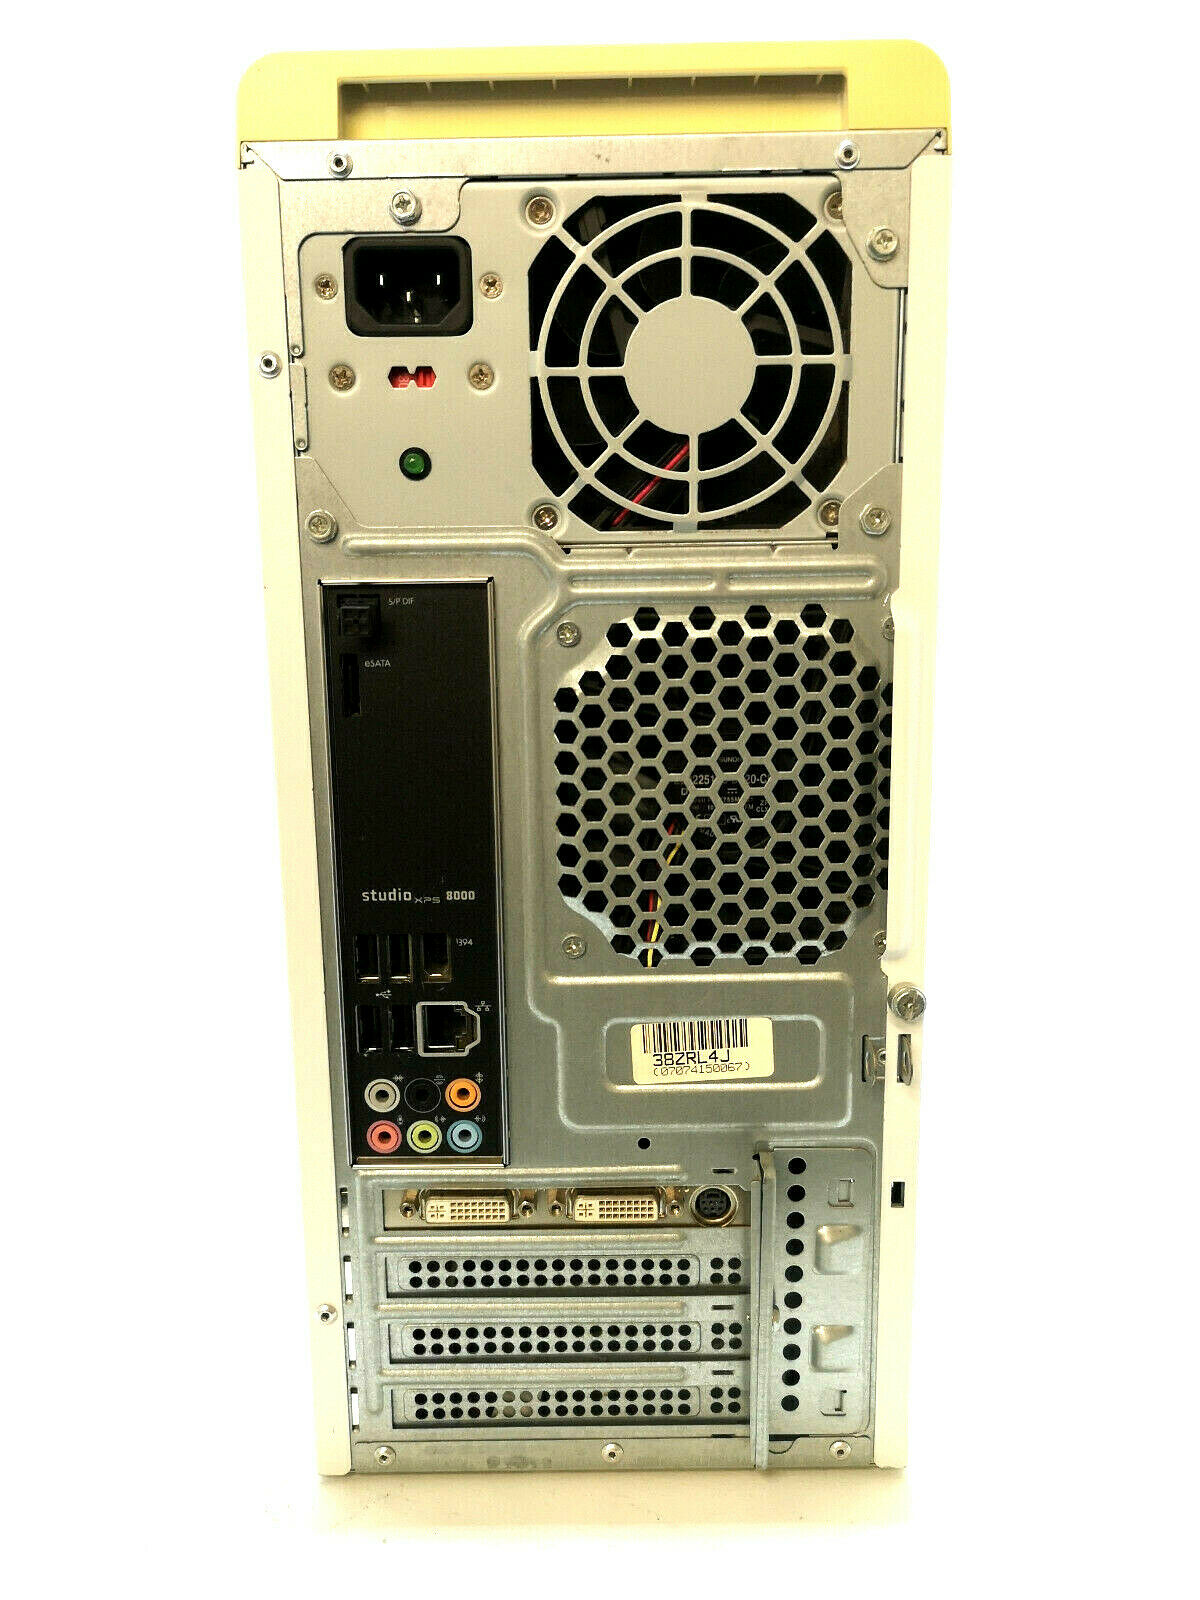 Refurbished Dell Studio XPS 8000 Desktop Tower PC